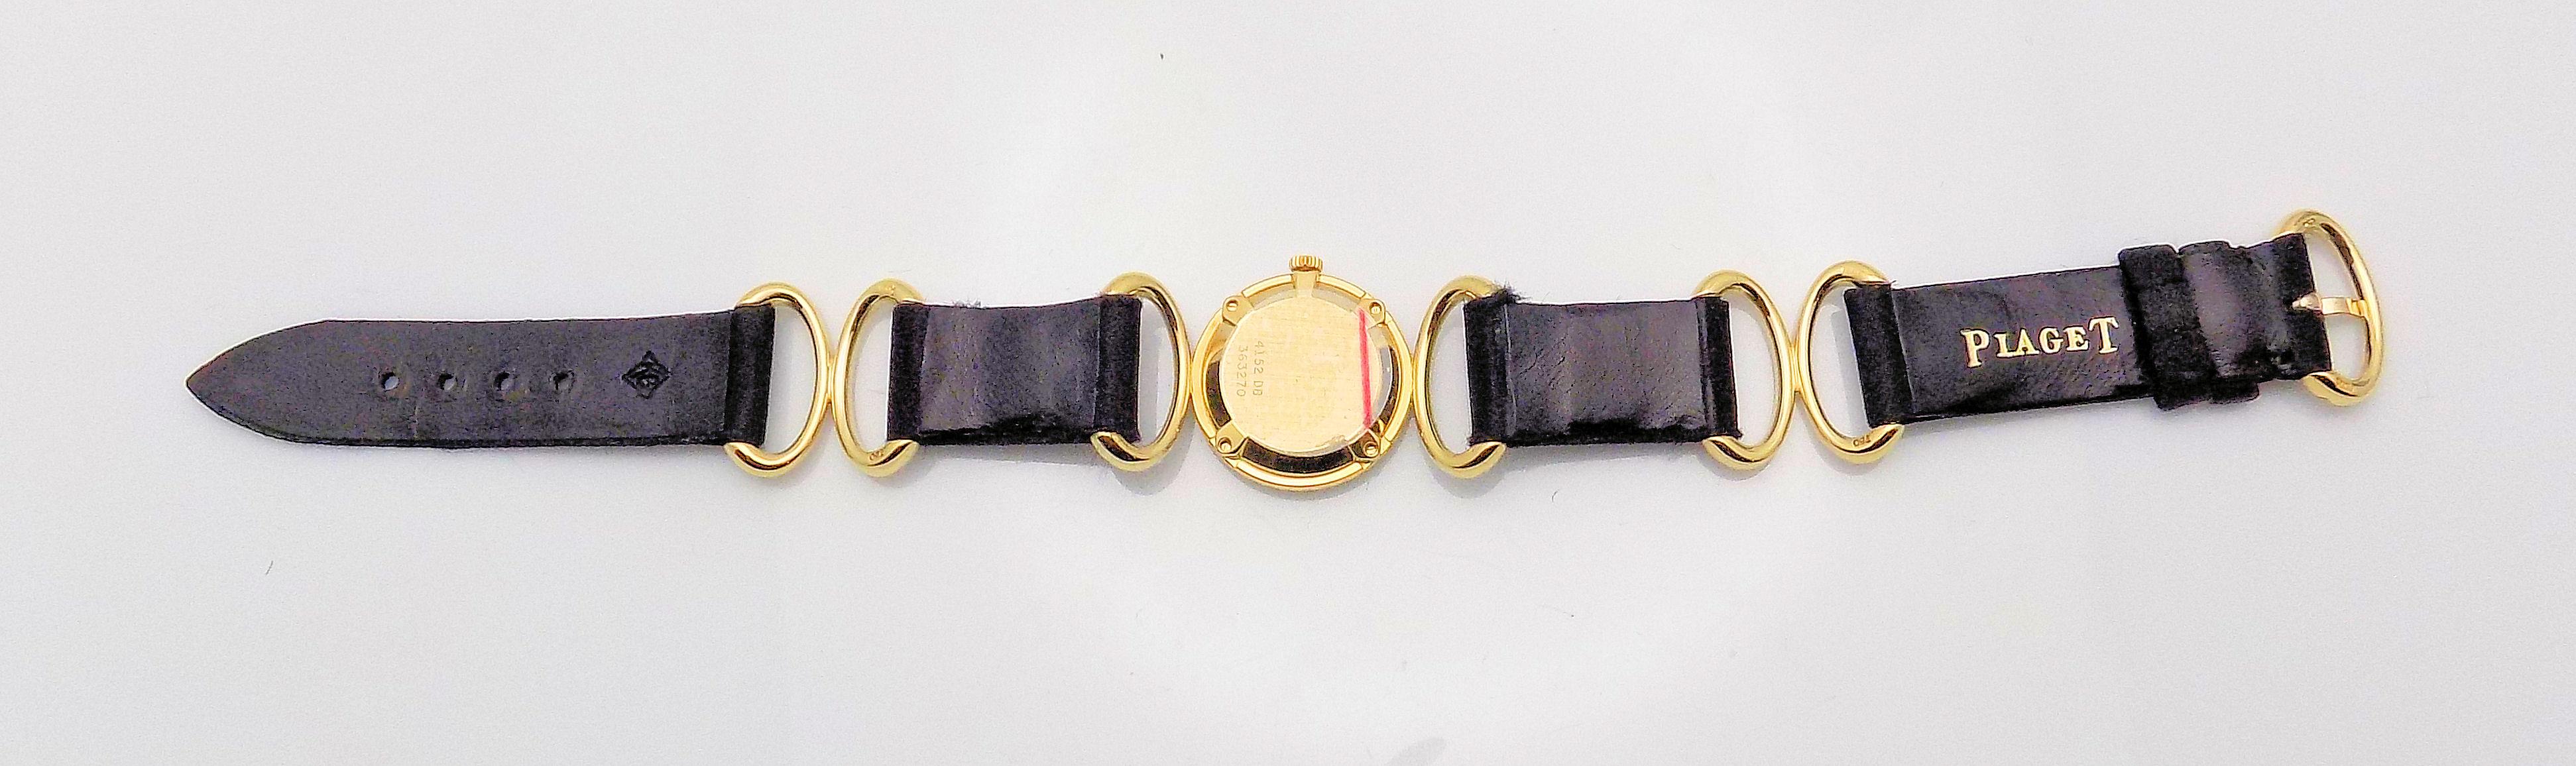 18 Karat Yellow Gold and Diamond Piaget Wristwatch For Sale 1